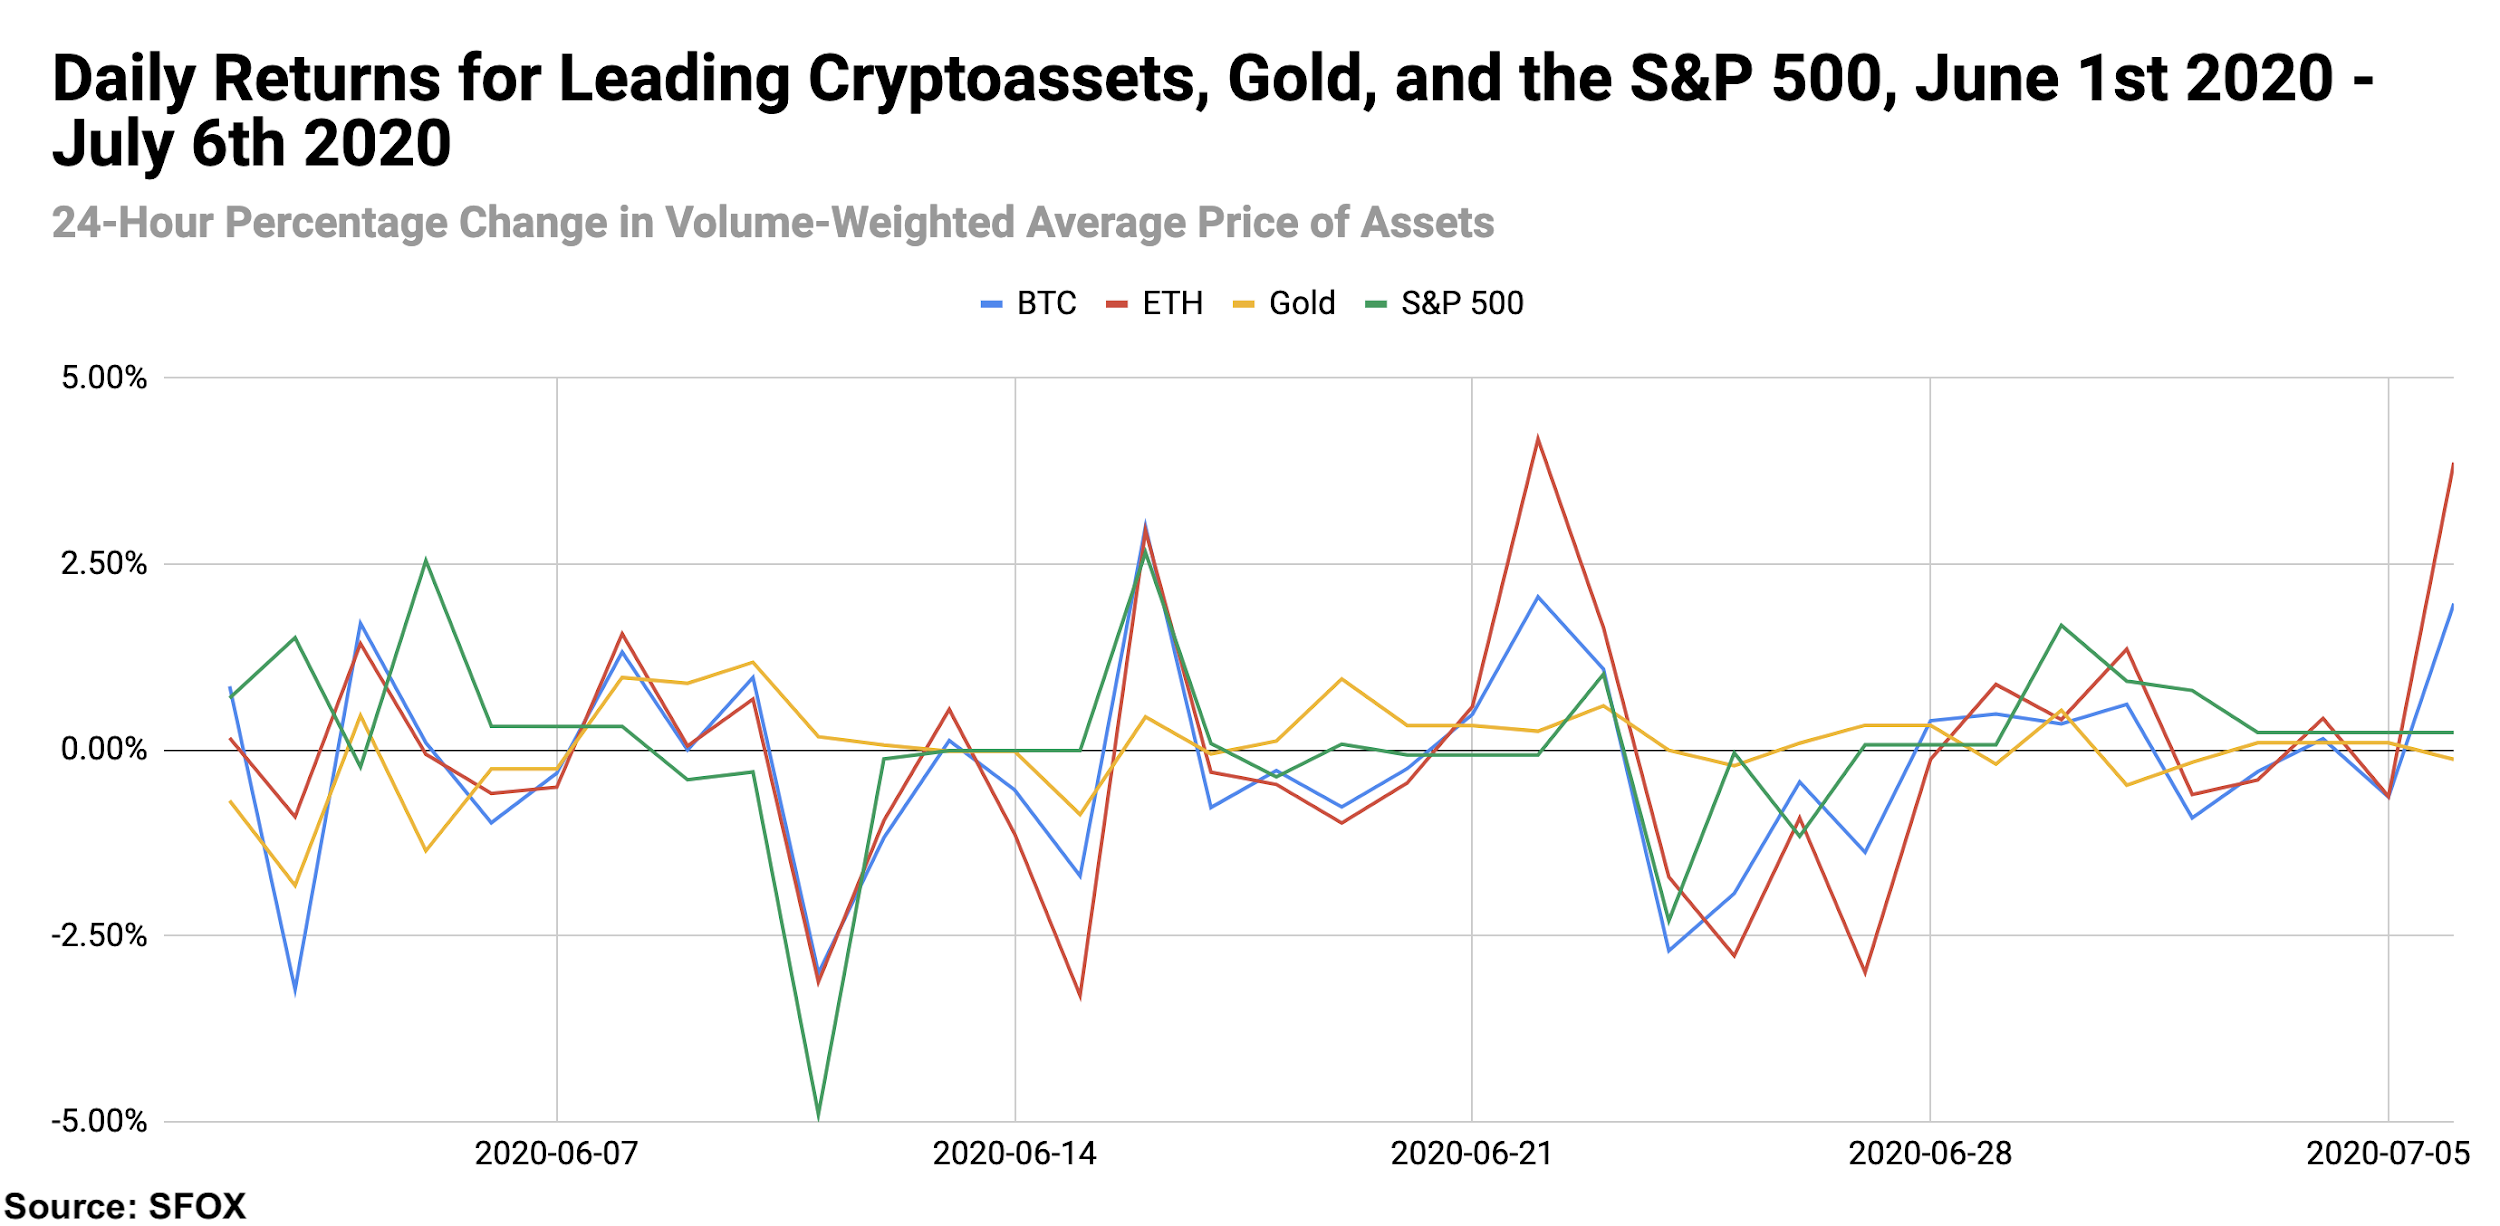 Bitcoin crypto S&P 500 gold daily returns data July 2020.